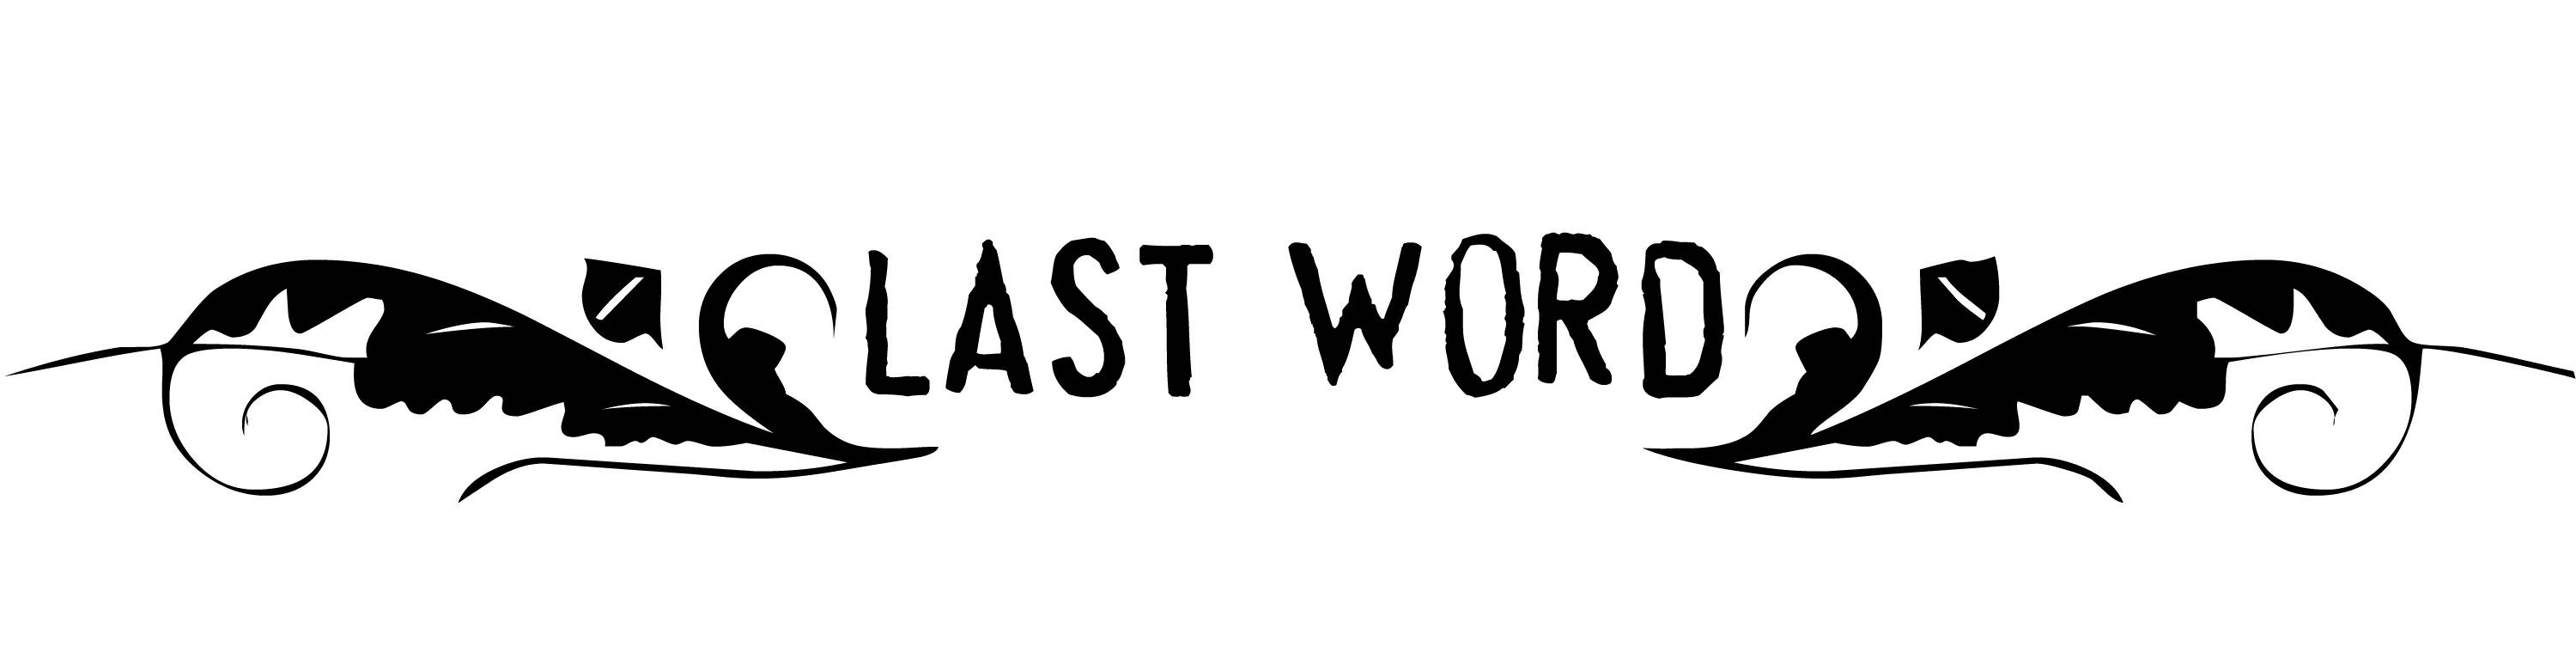 Last Word's logo